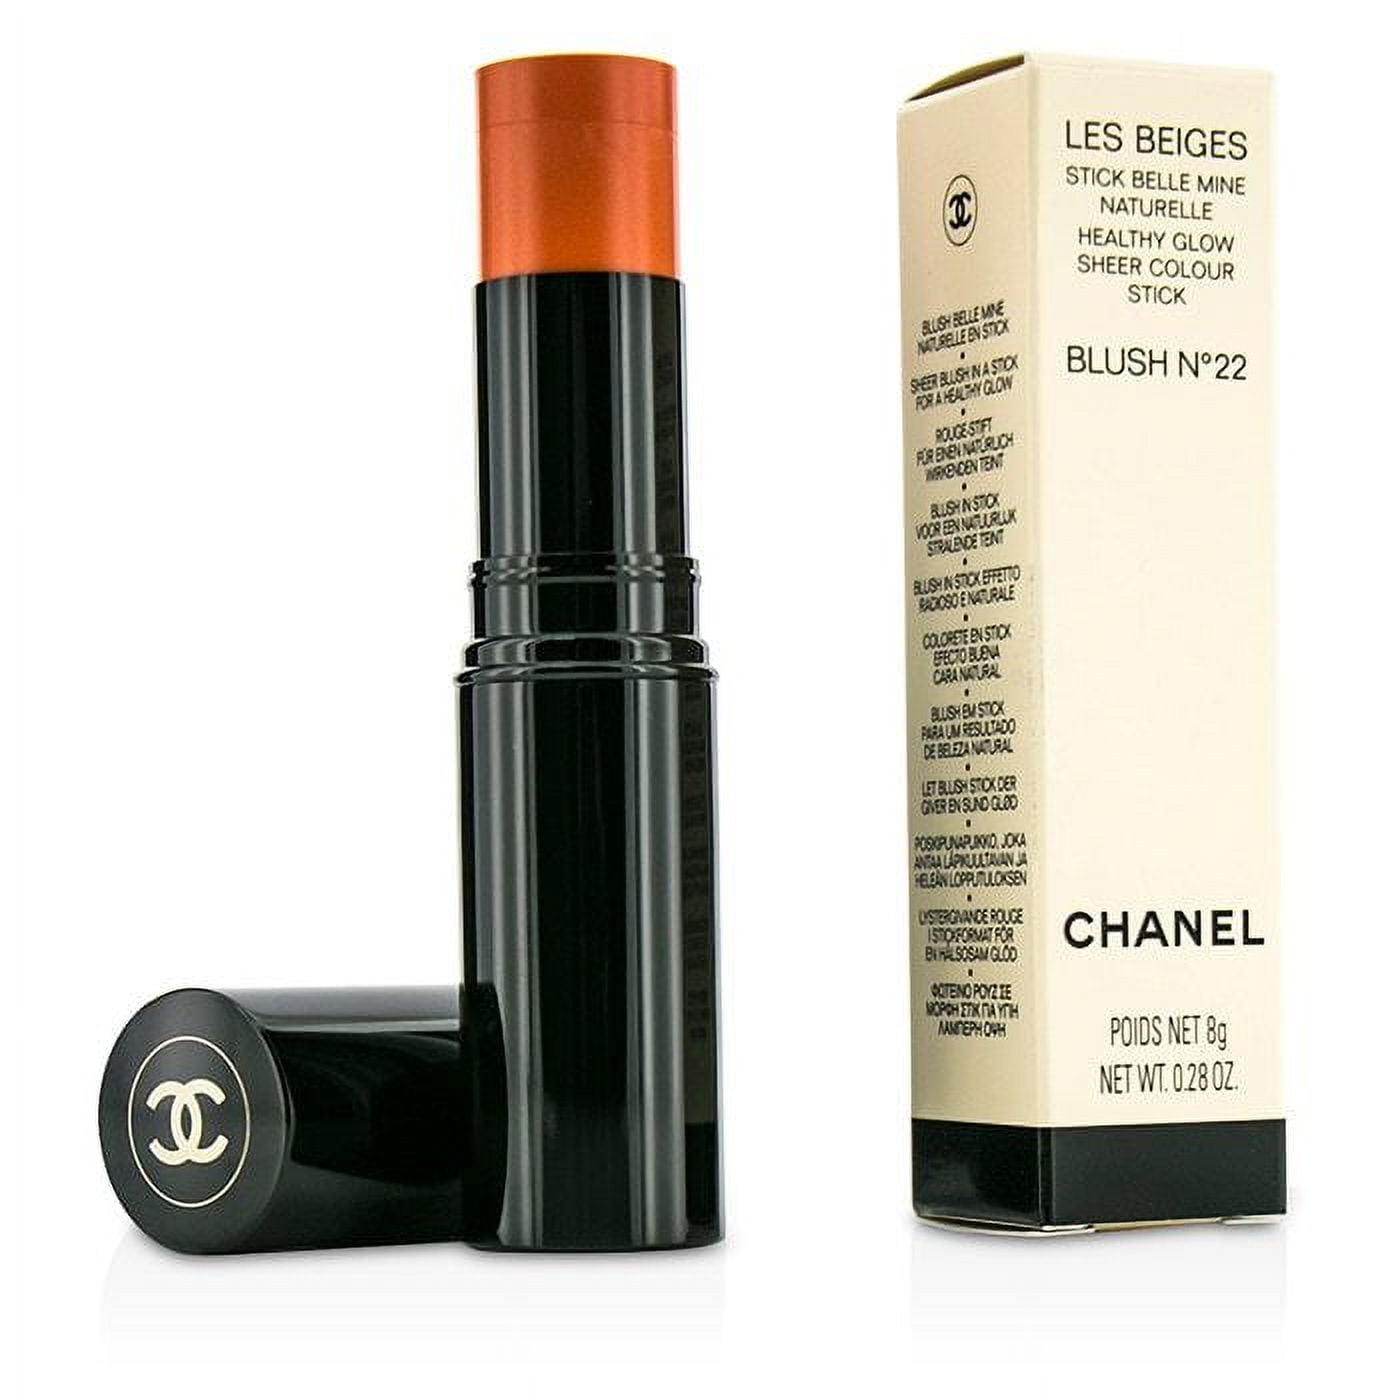 Chanel Les Beiges Healthy Glow Sheer Colour Stick Blush - No. 22 0.28 oz  Blush